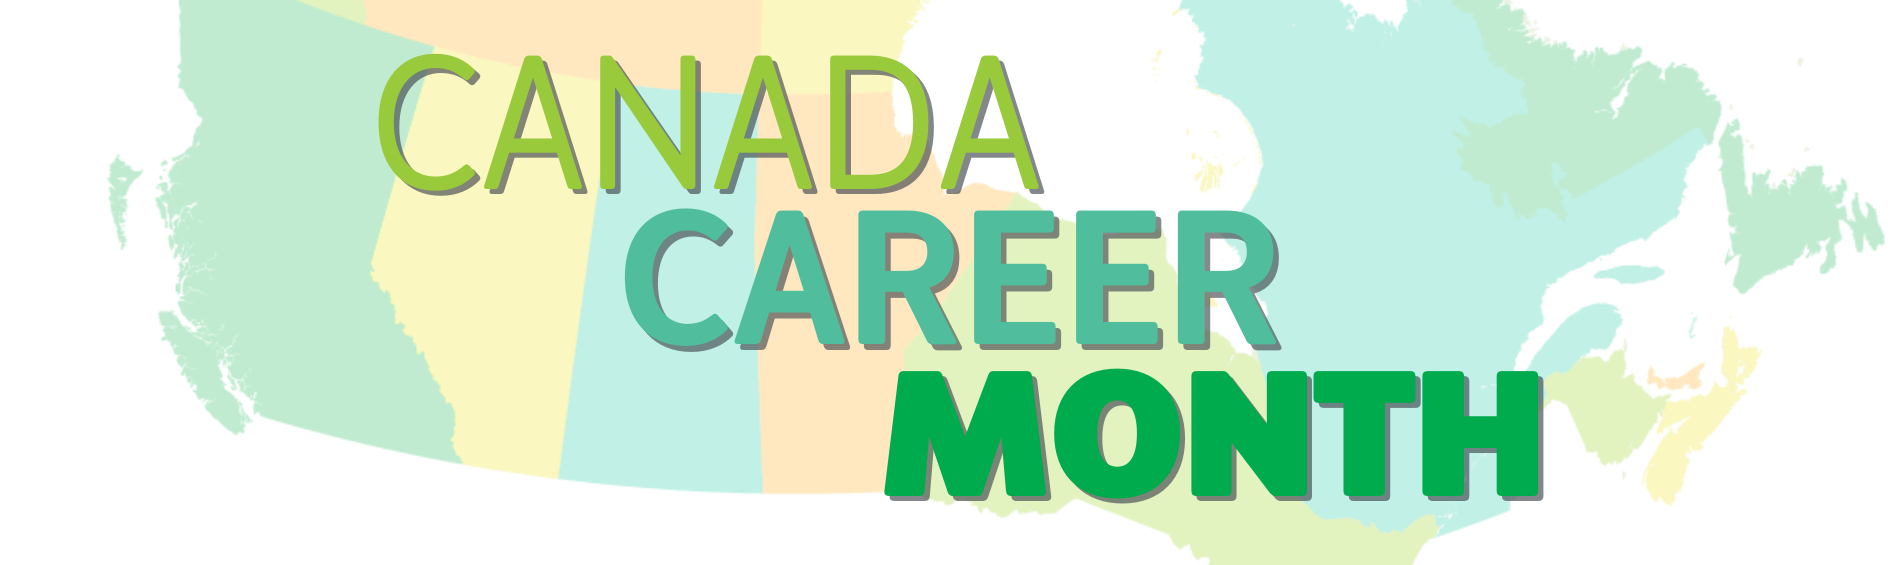 Canada Career Month - November 2021